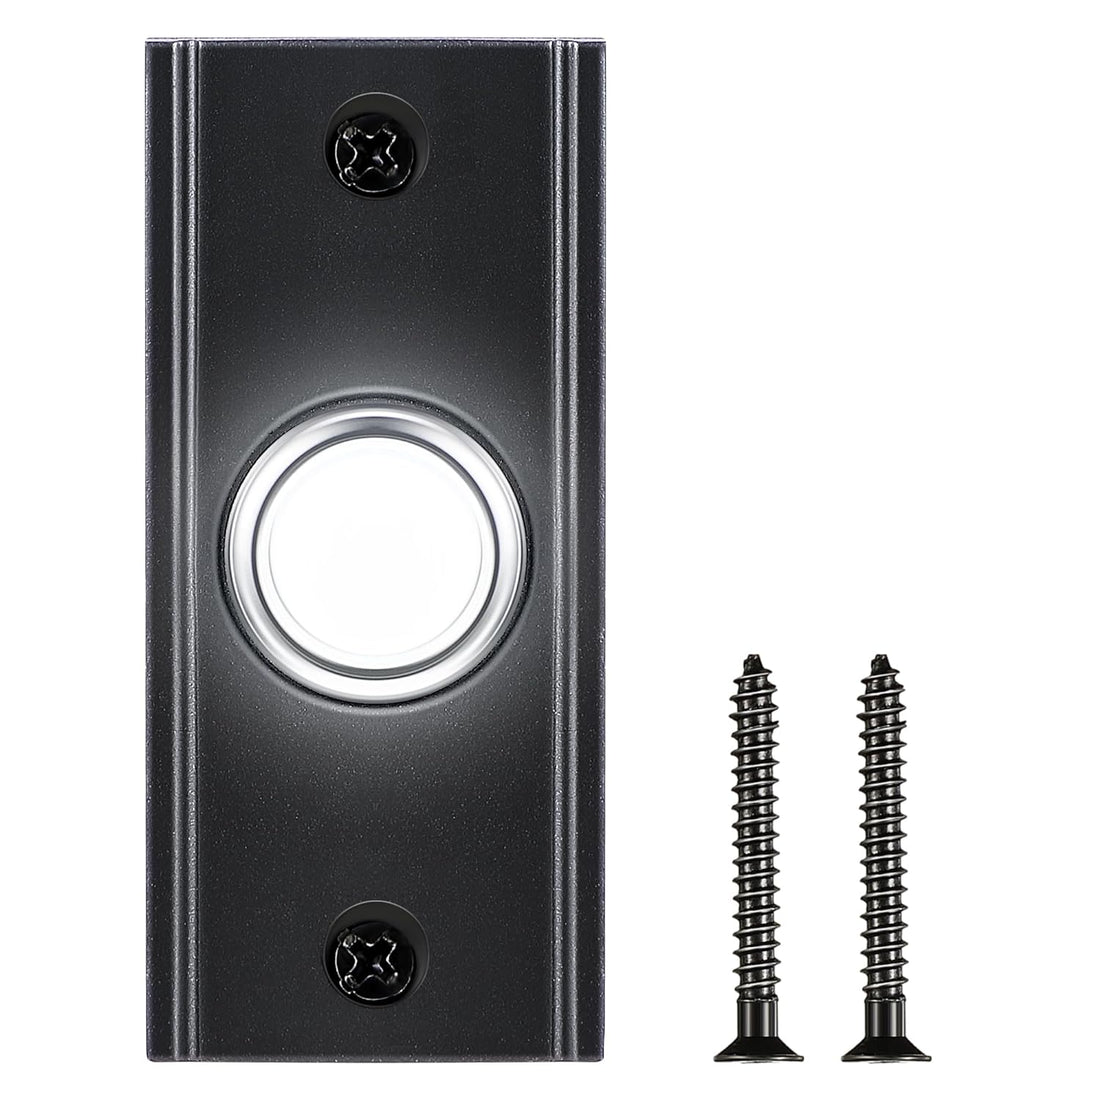 Dreyoo Lighted Metal Doorbell Push Button, Vintage Doorbell Push LED Buttons Replacement Most Door Chimes, Wall Mounted Door Bell Buttons Use in Home, Universal Garage Door Opener Switch